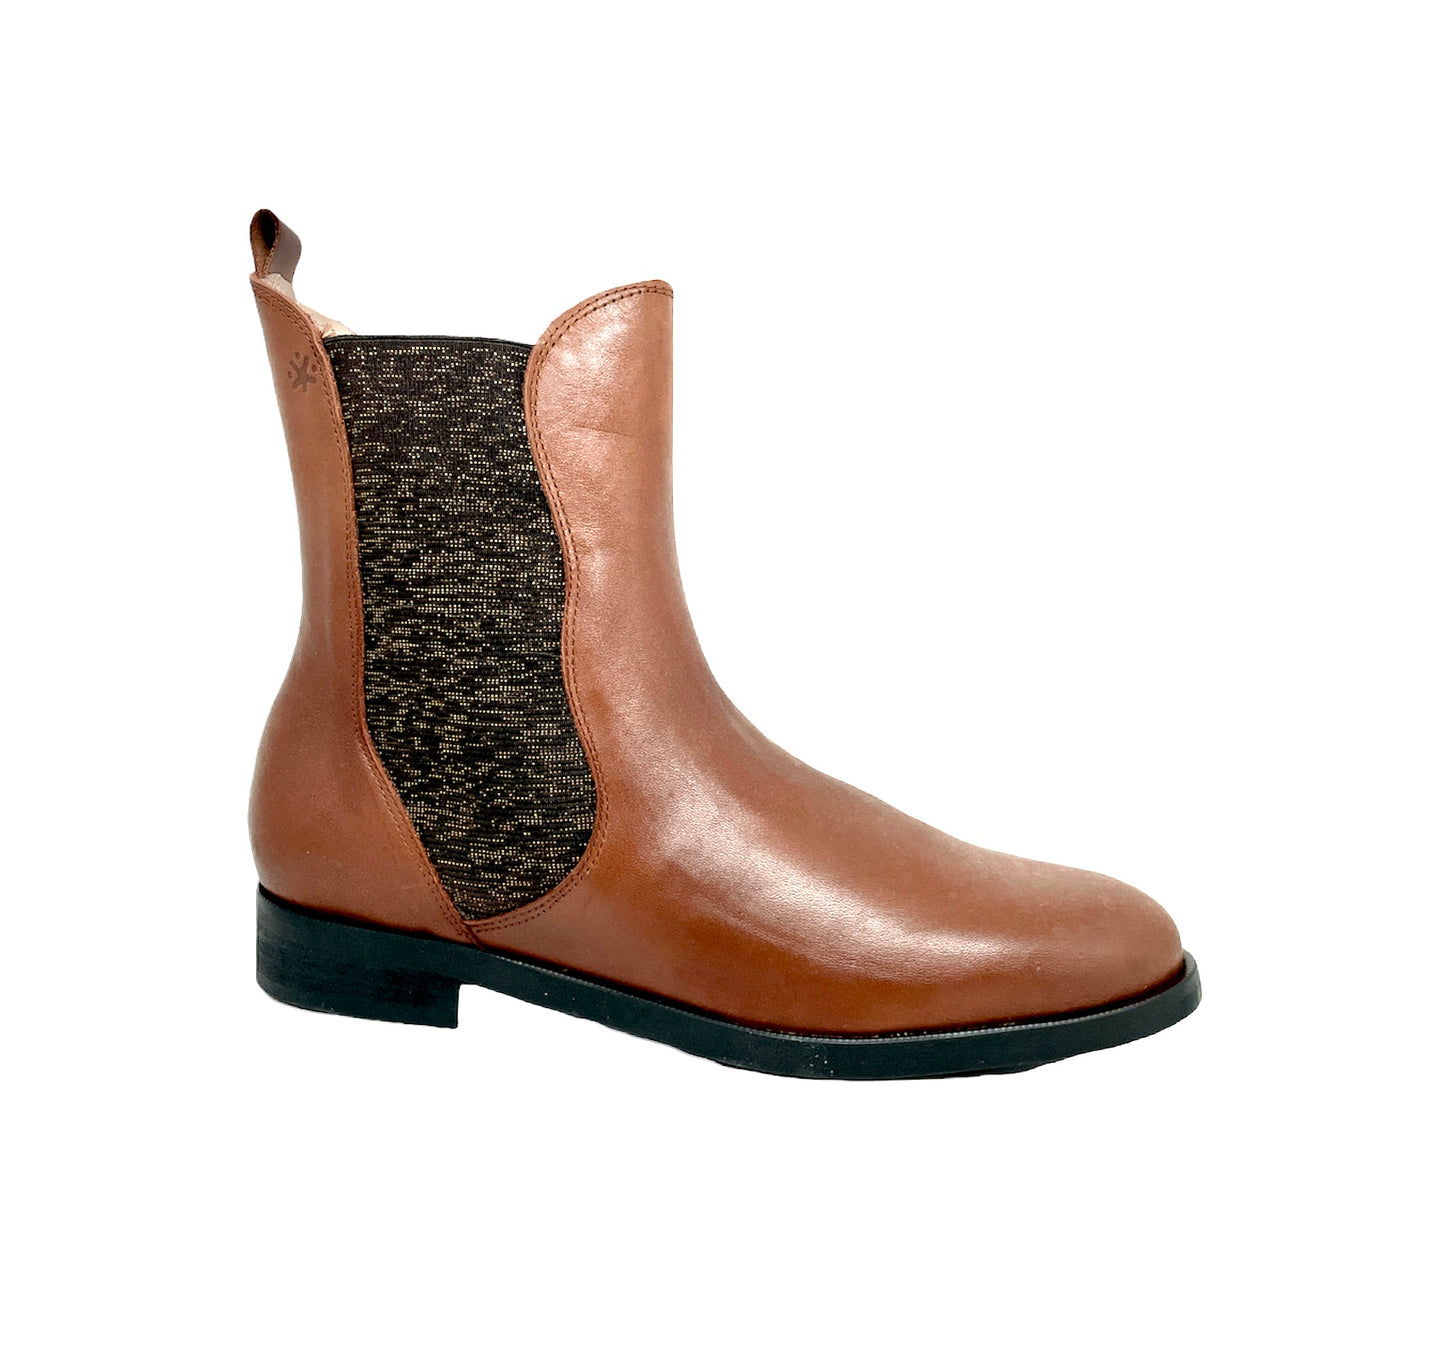 ACEBOS 9963 marron boots/bottines